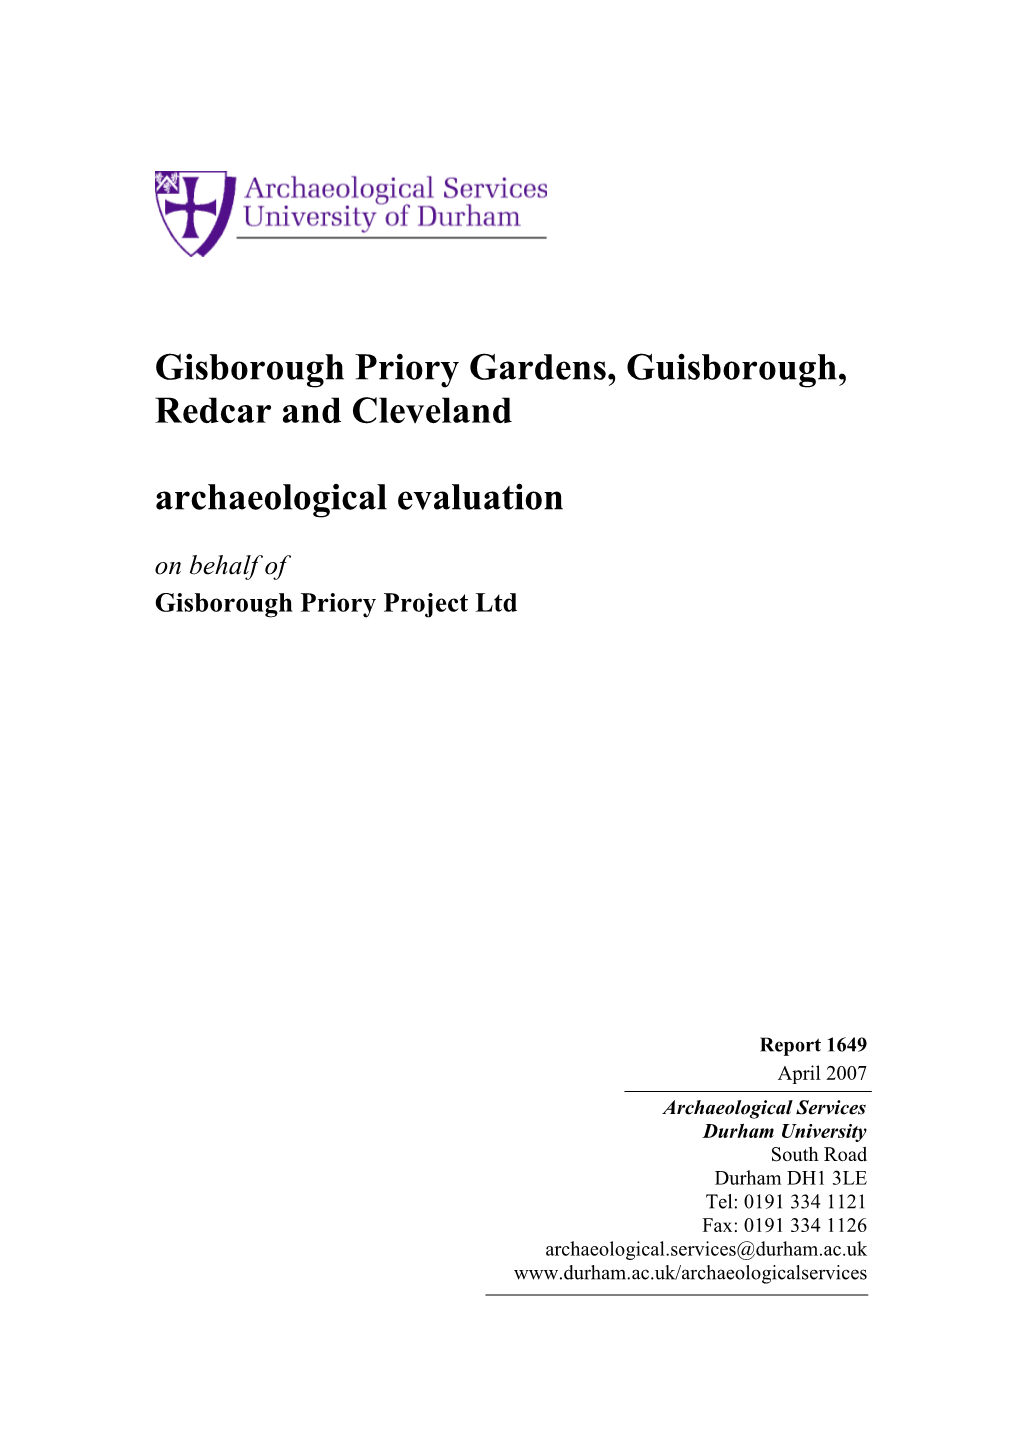 Gisborough Priory Gardens, Guisborough, Redcar and Cleveland Archaeological Evaluation on Behalf of Gisborough Priory Project Ltd